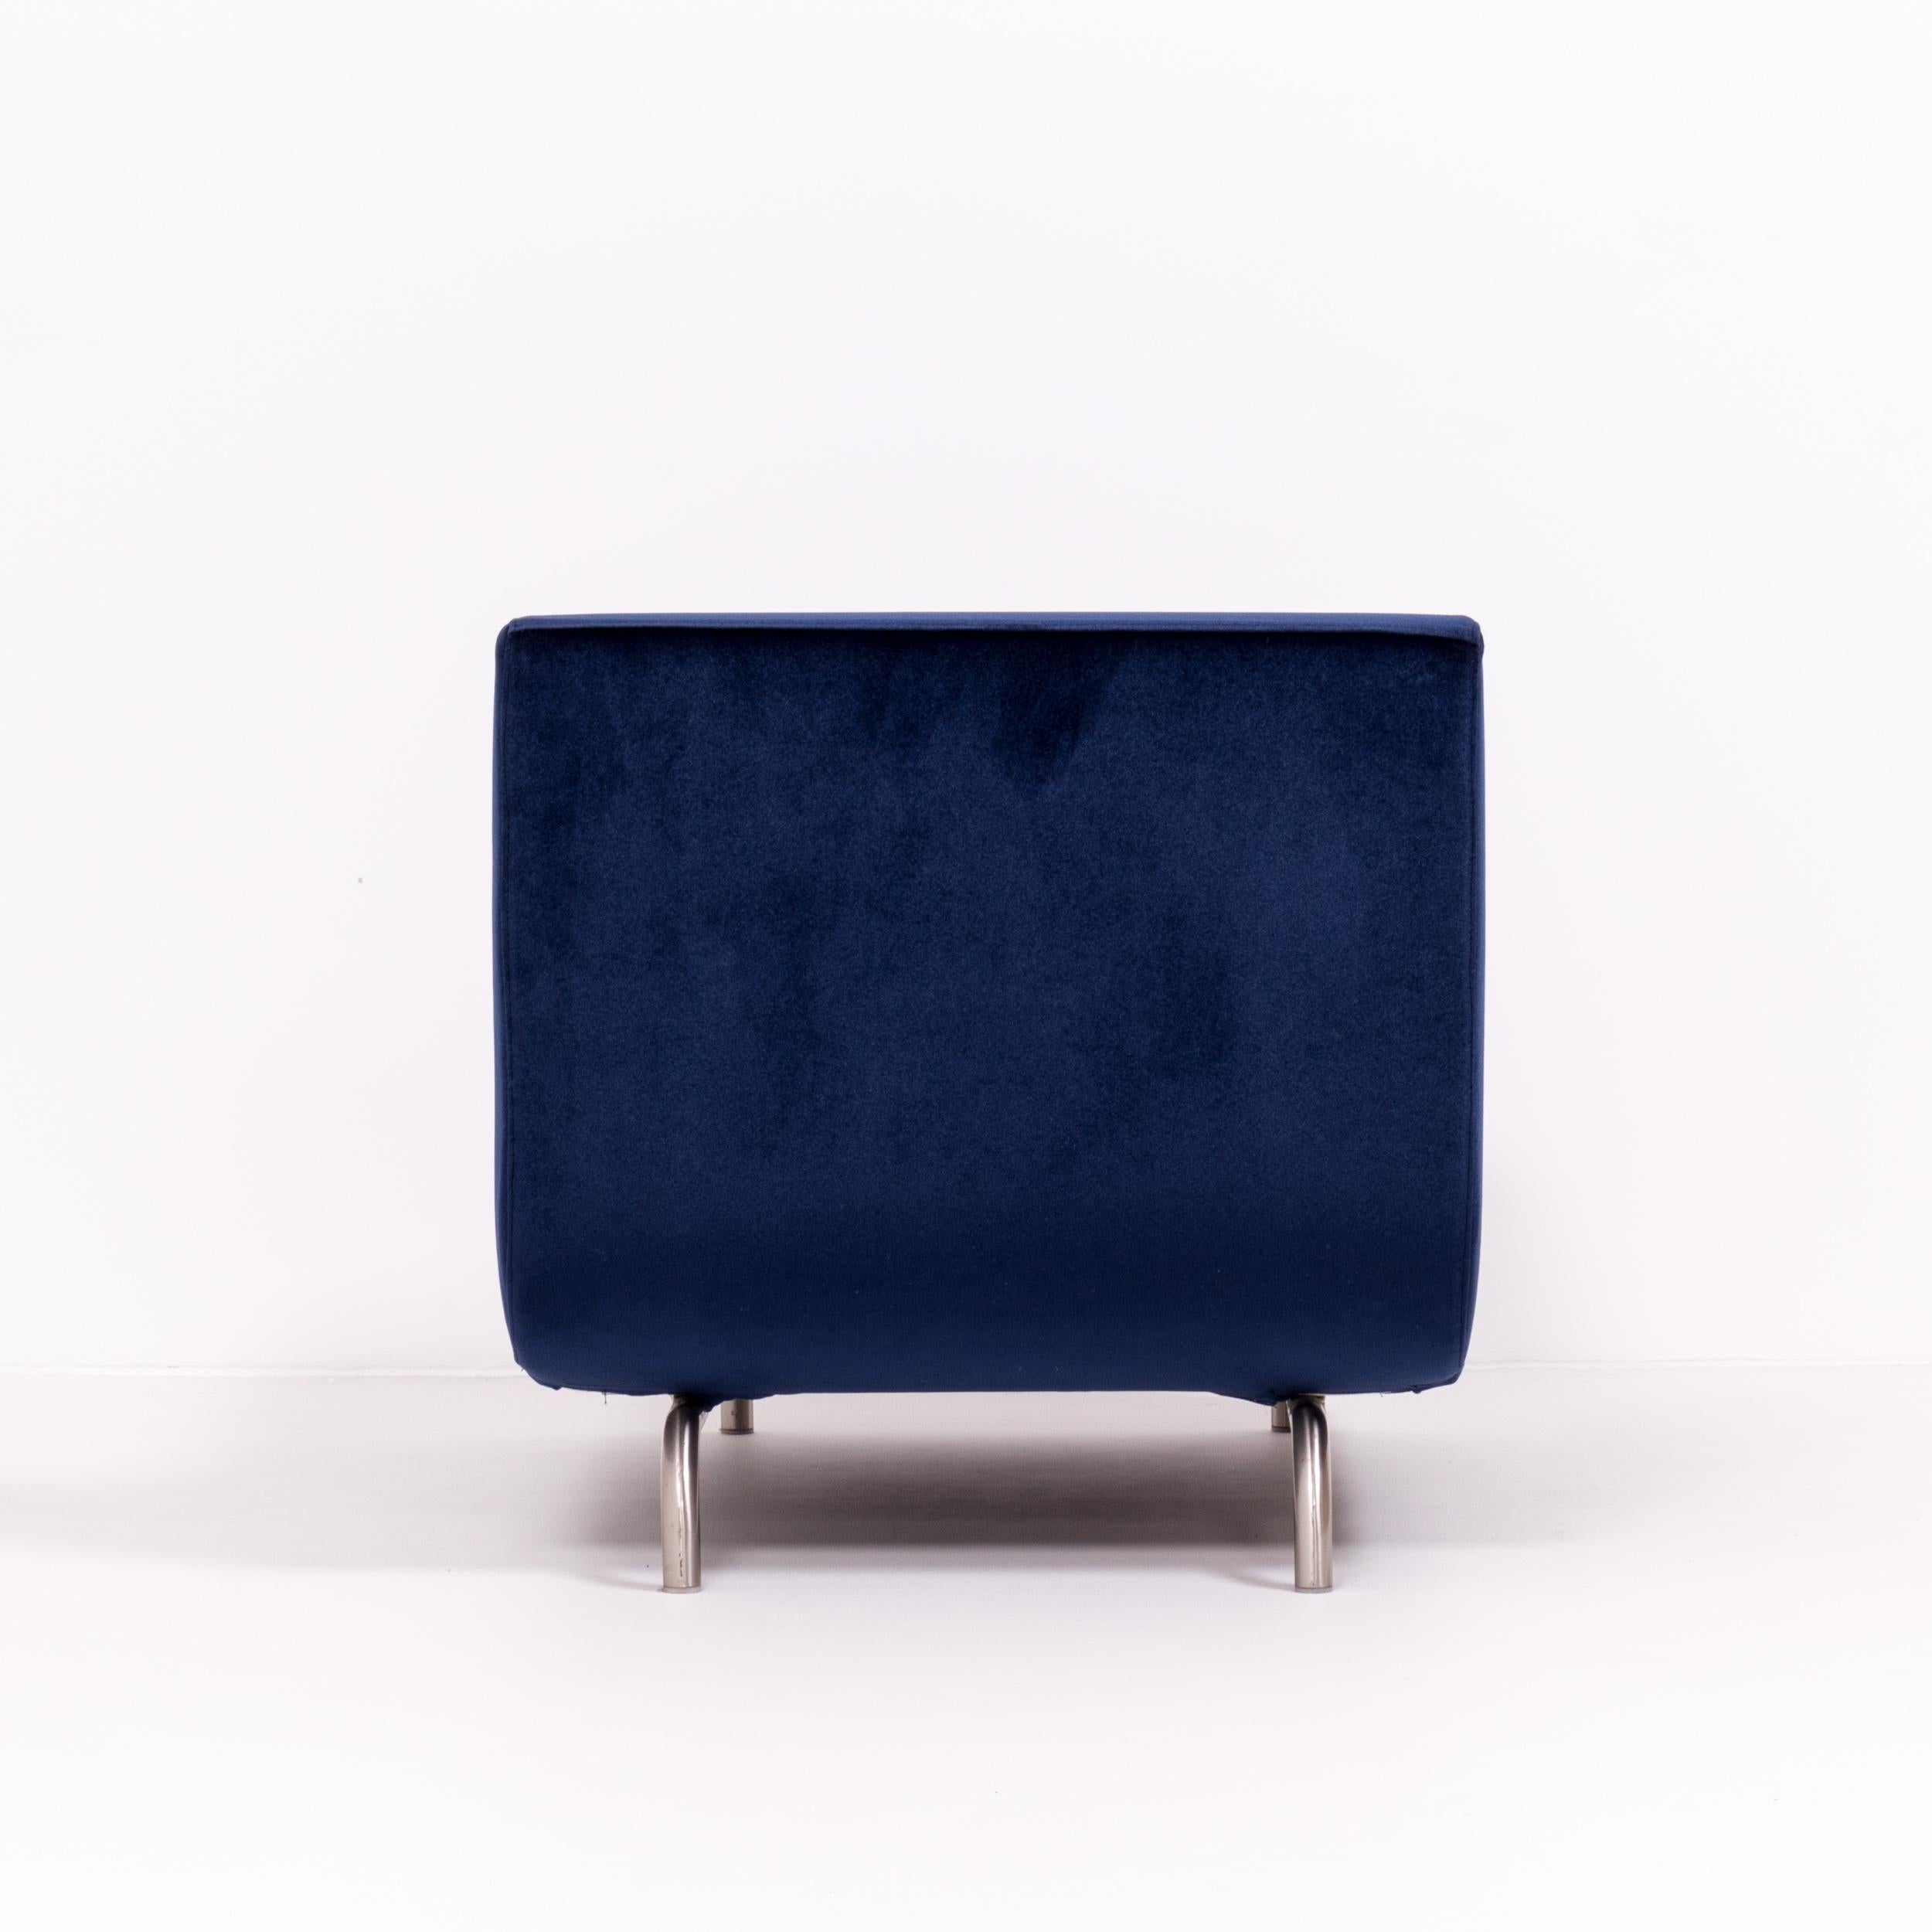 Late 20th Century Minotti by Rodolfo Dordoni Dubuffet Navy Blue Lounge Chairs, Set of 2